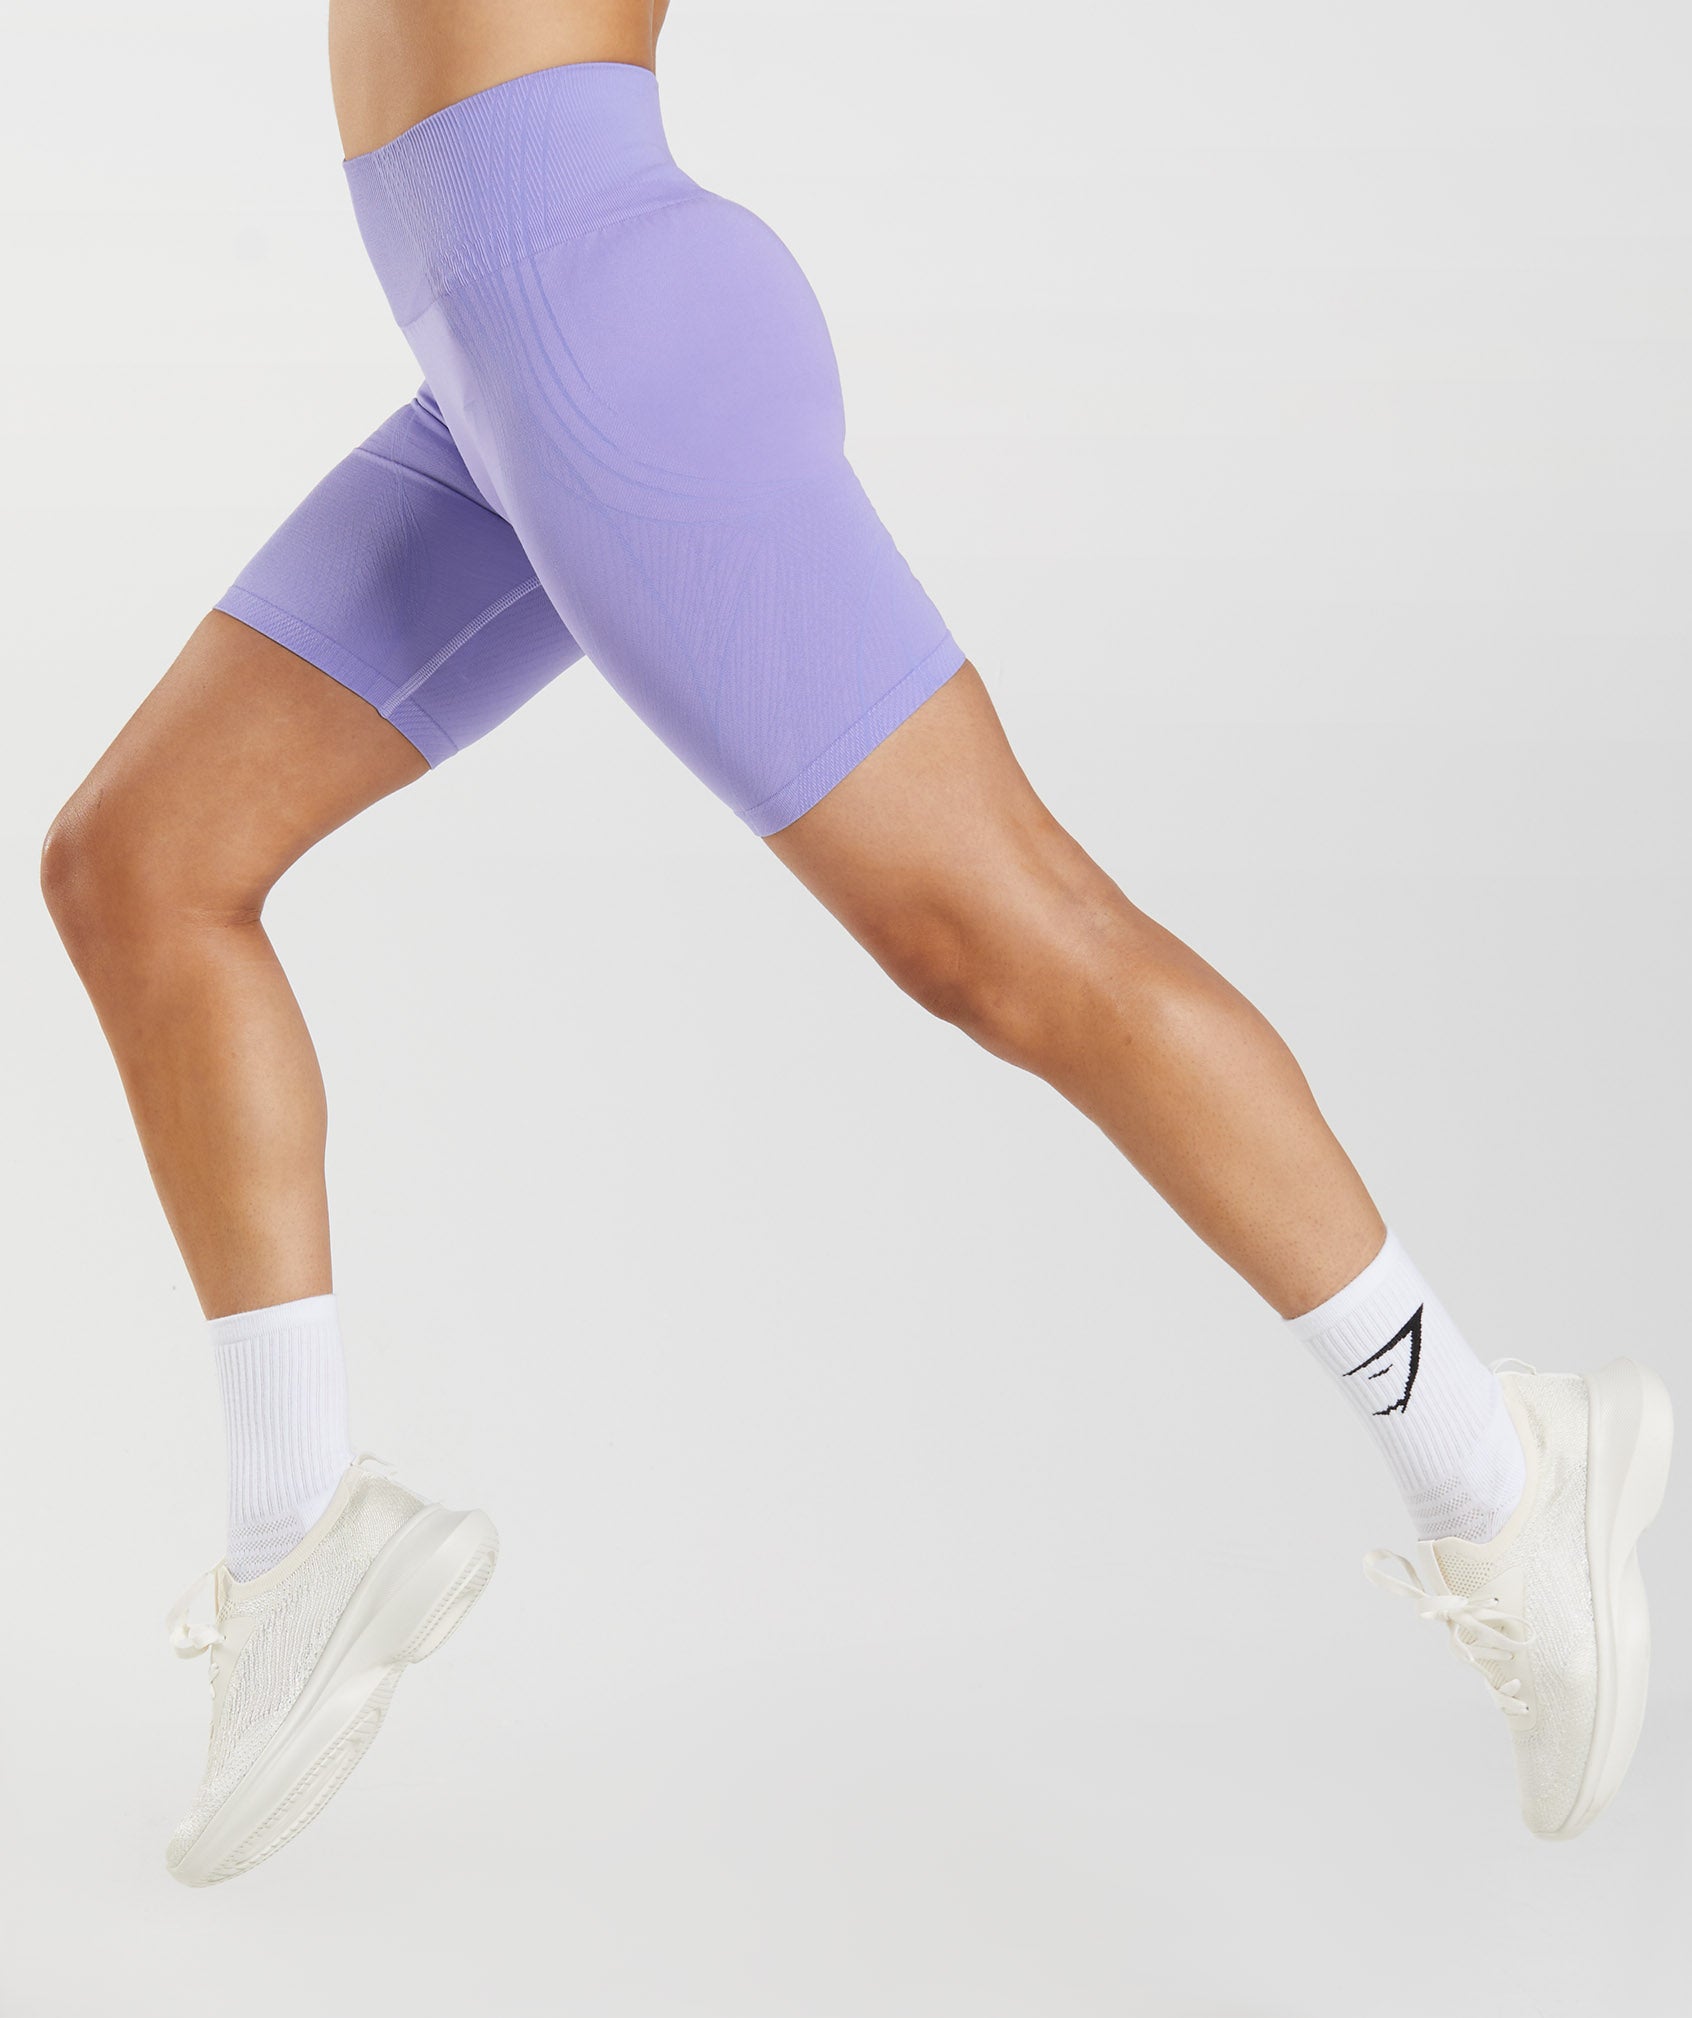 Apex Seamless Shorts in Digital Violet/Dusted Violet